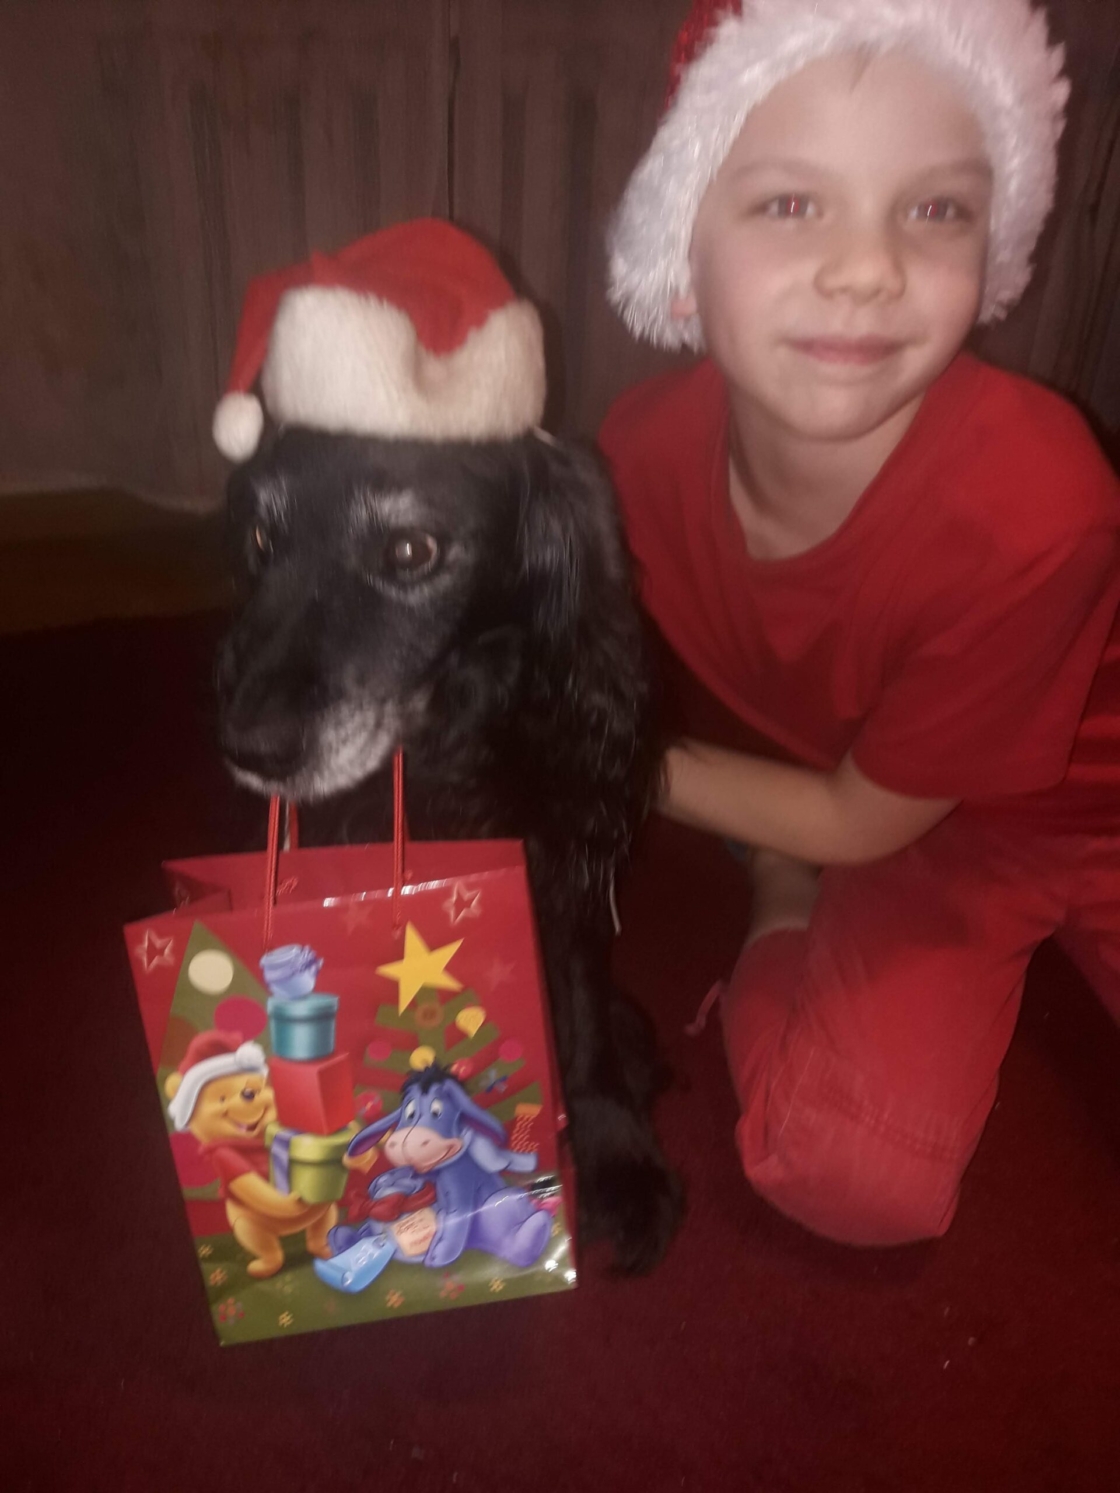 Koer viib vanemale vennale jõulukinki